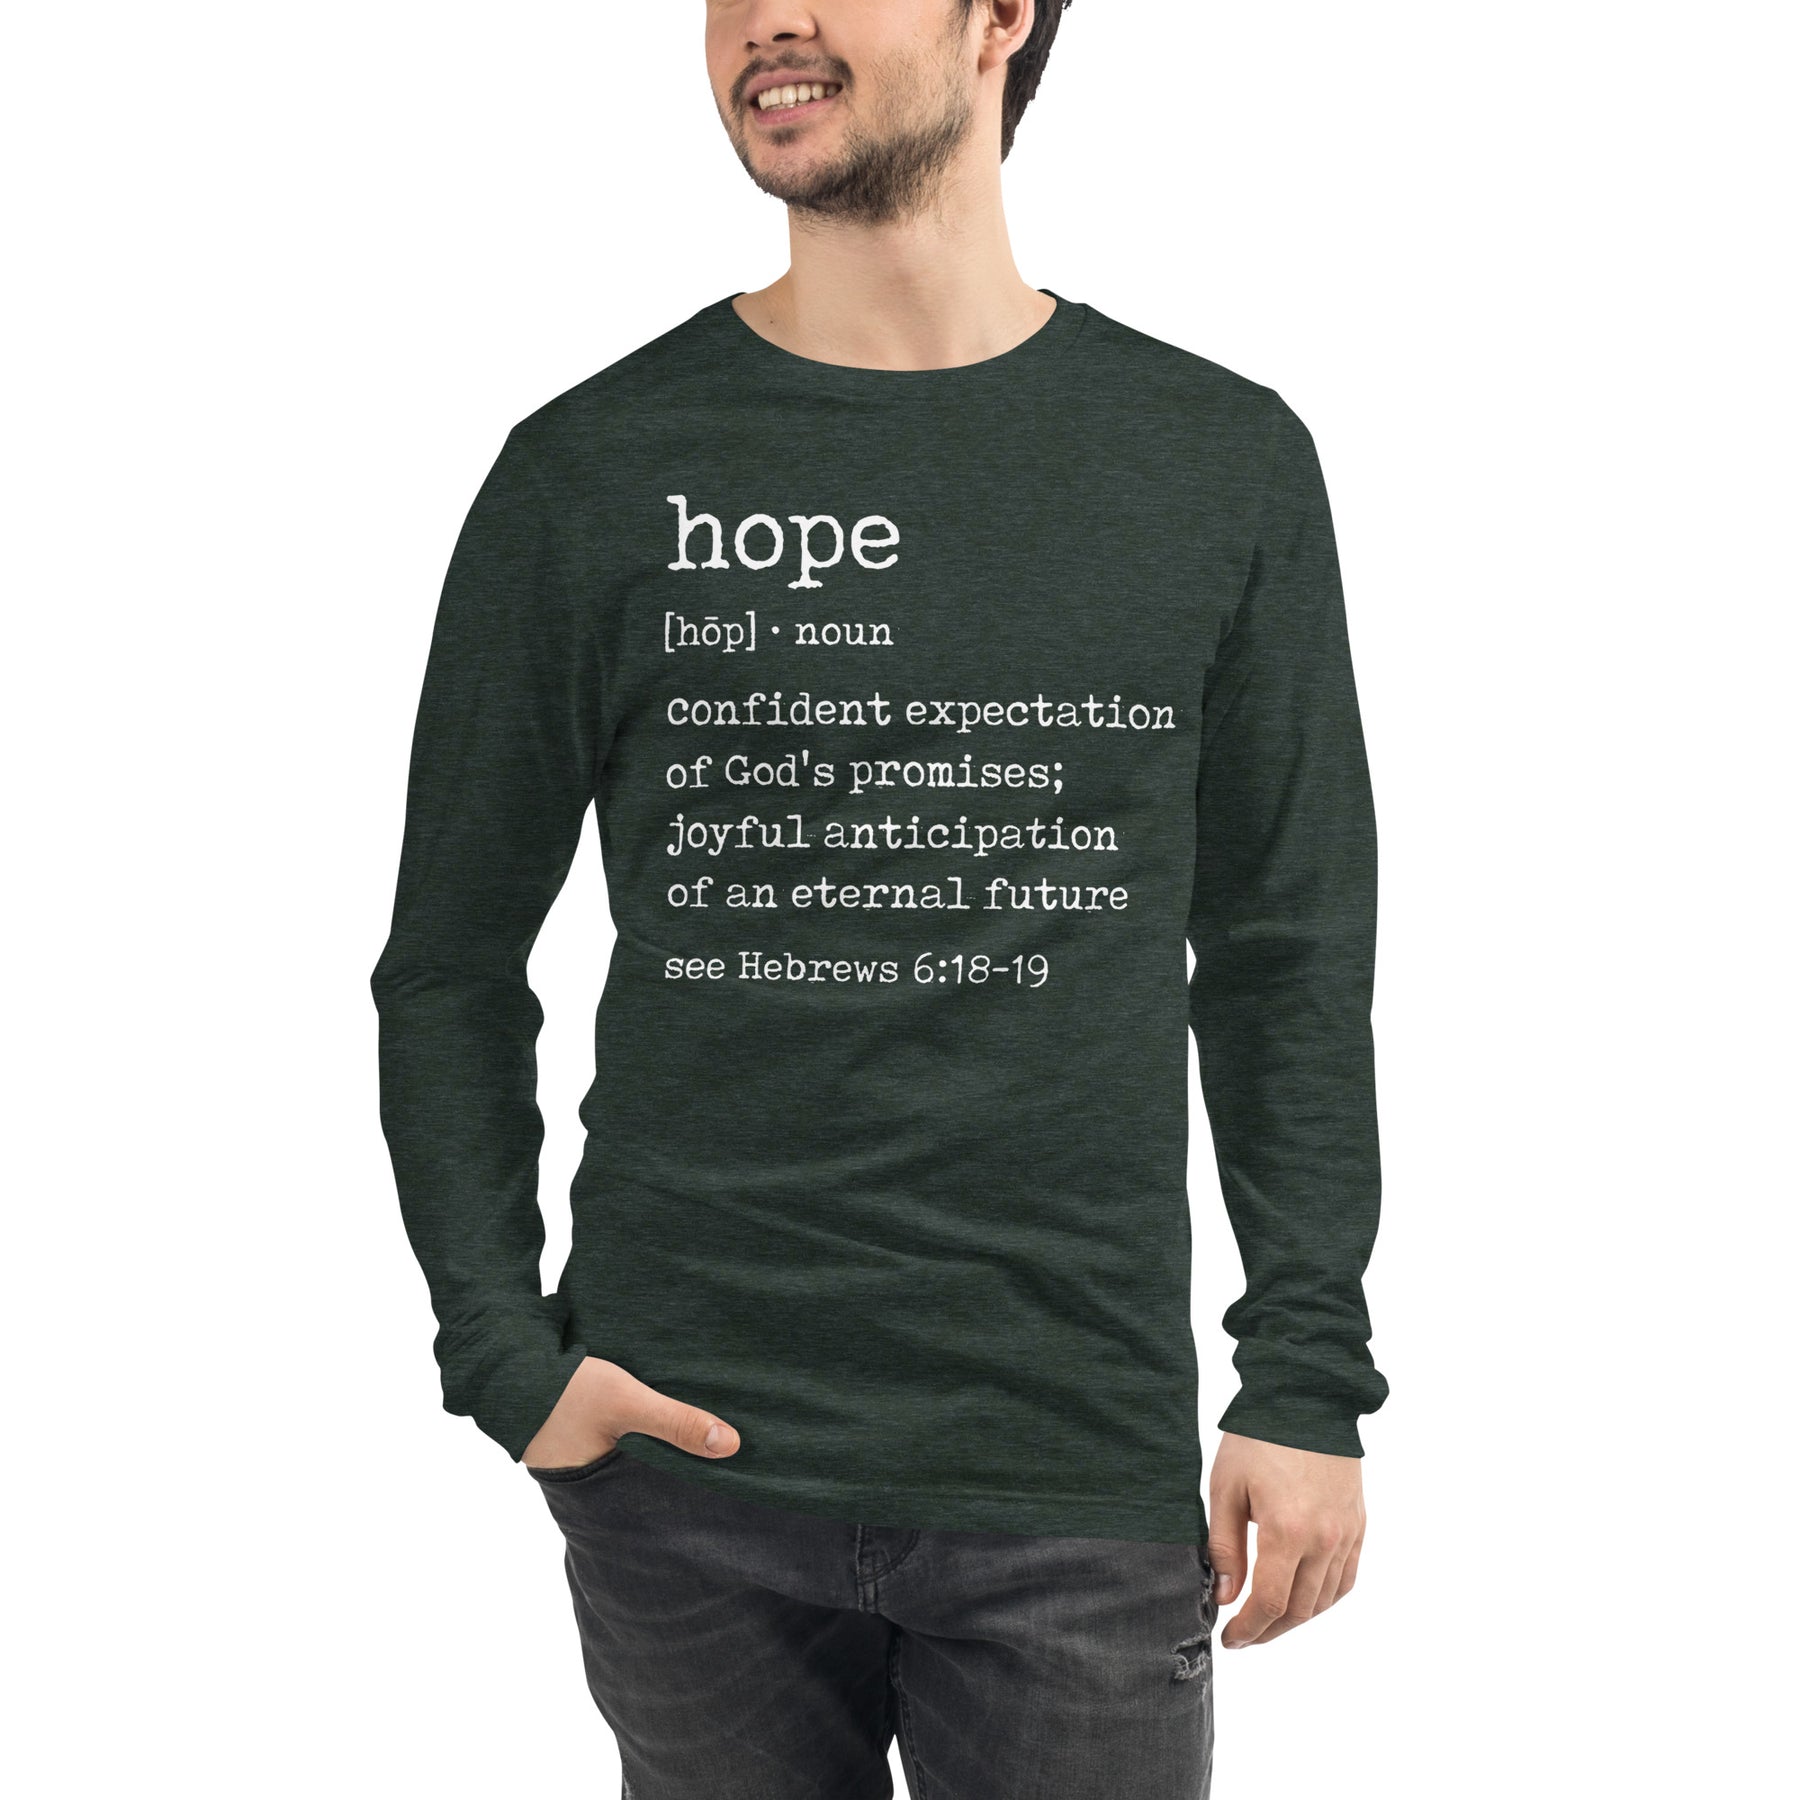 Hope Definition - Men's Long Sleeve T-Shirt